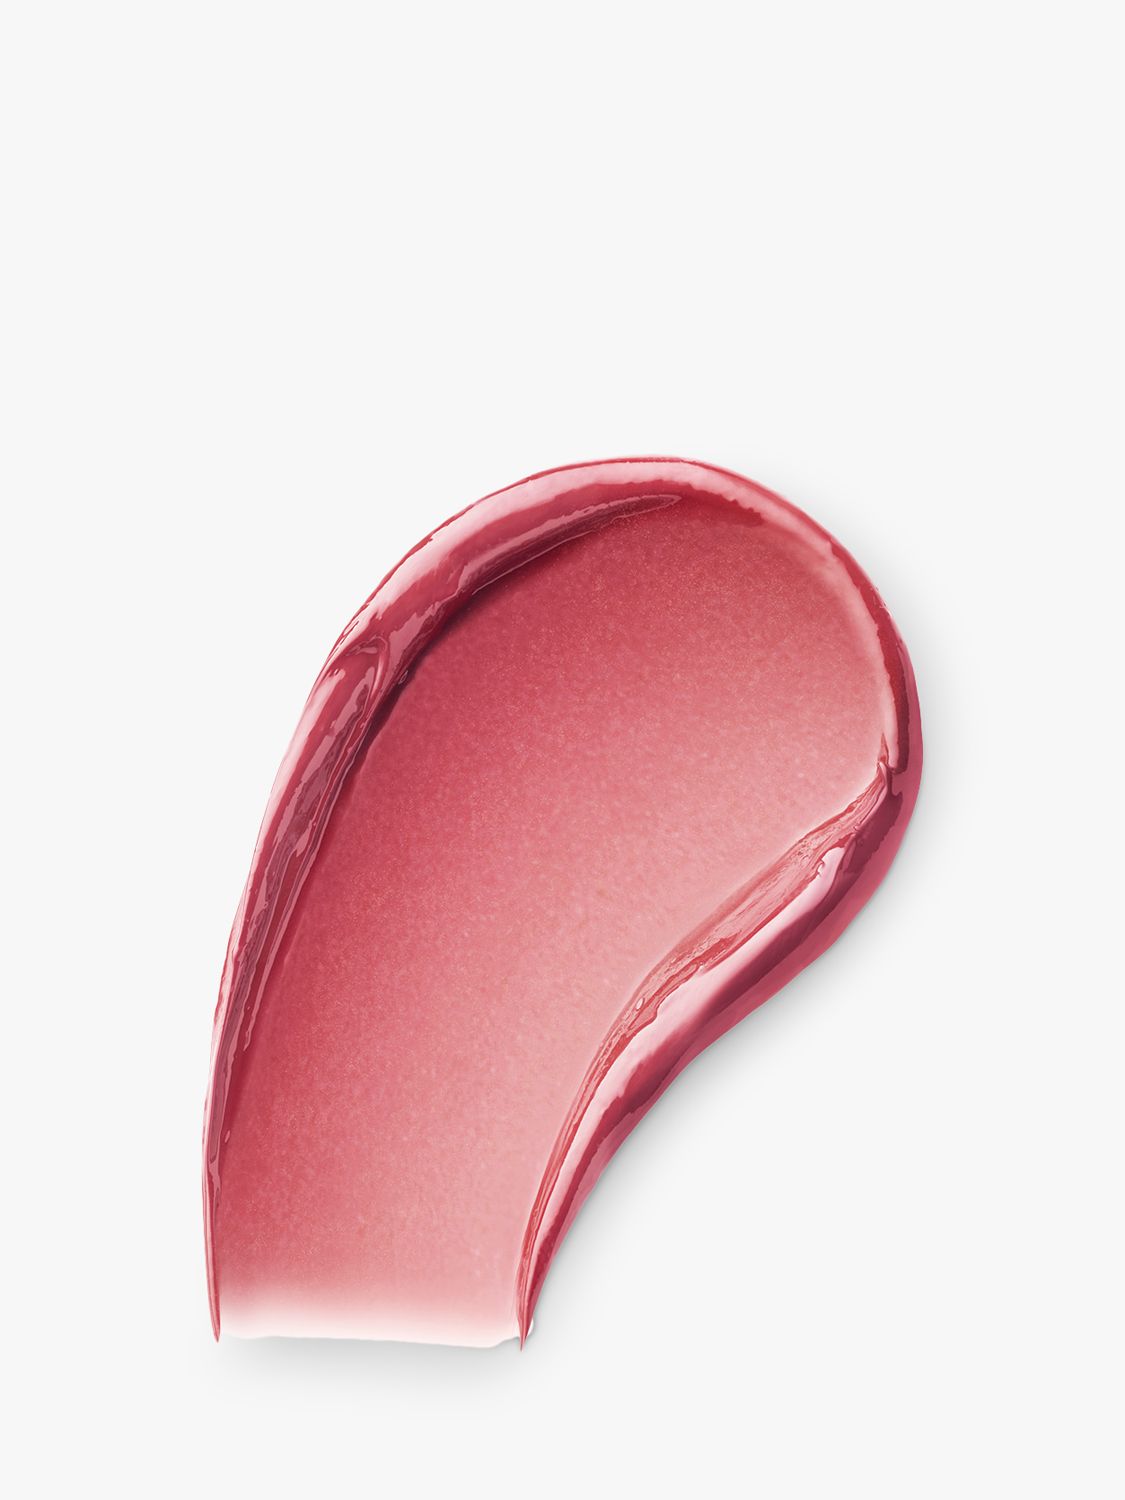 Lancôme L'Absolu Rouge Cream Lipstick, 06 Rose-Nu 2